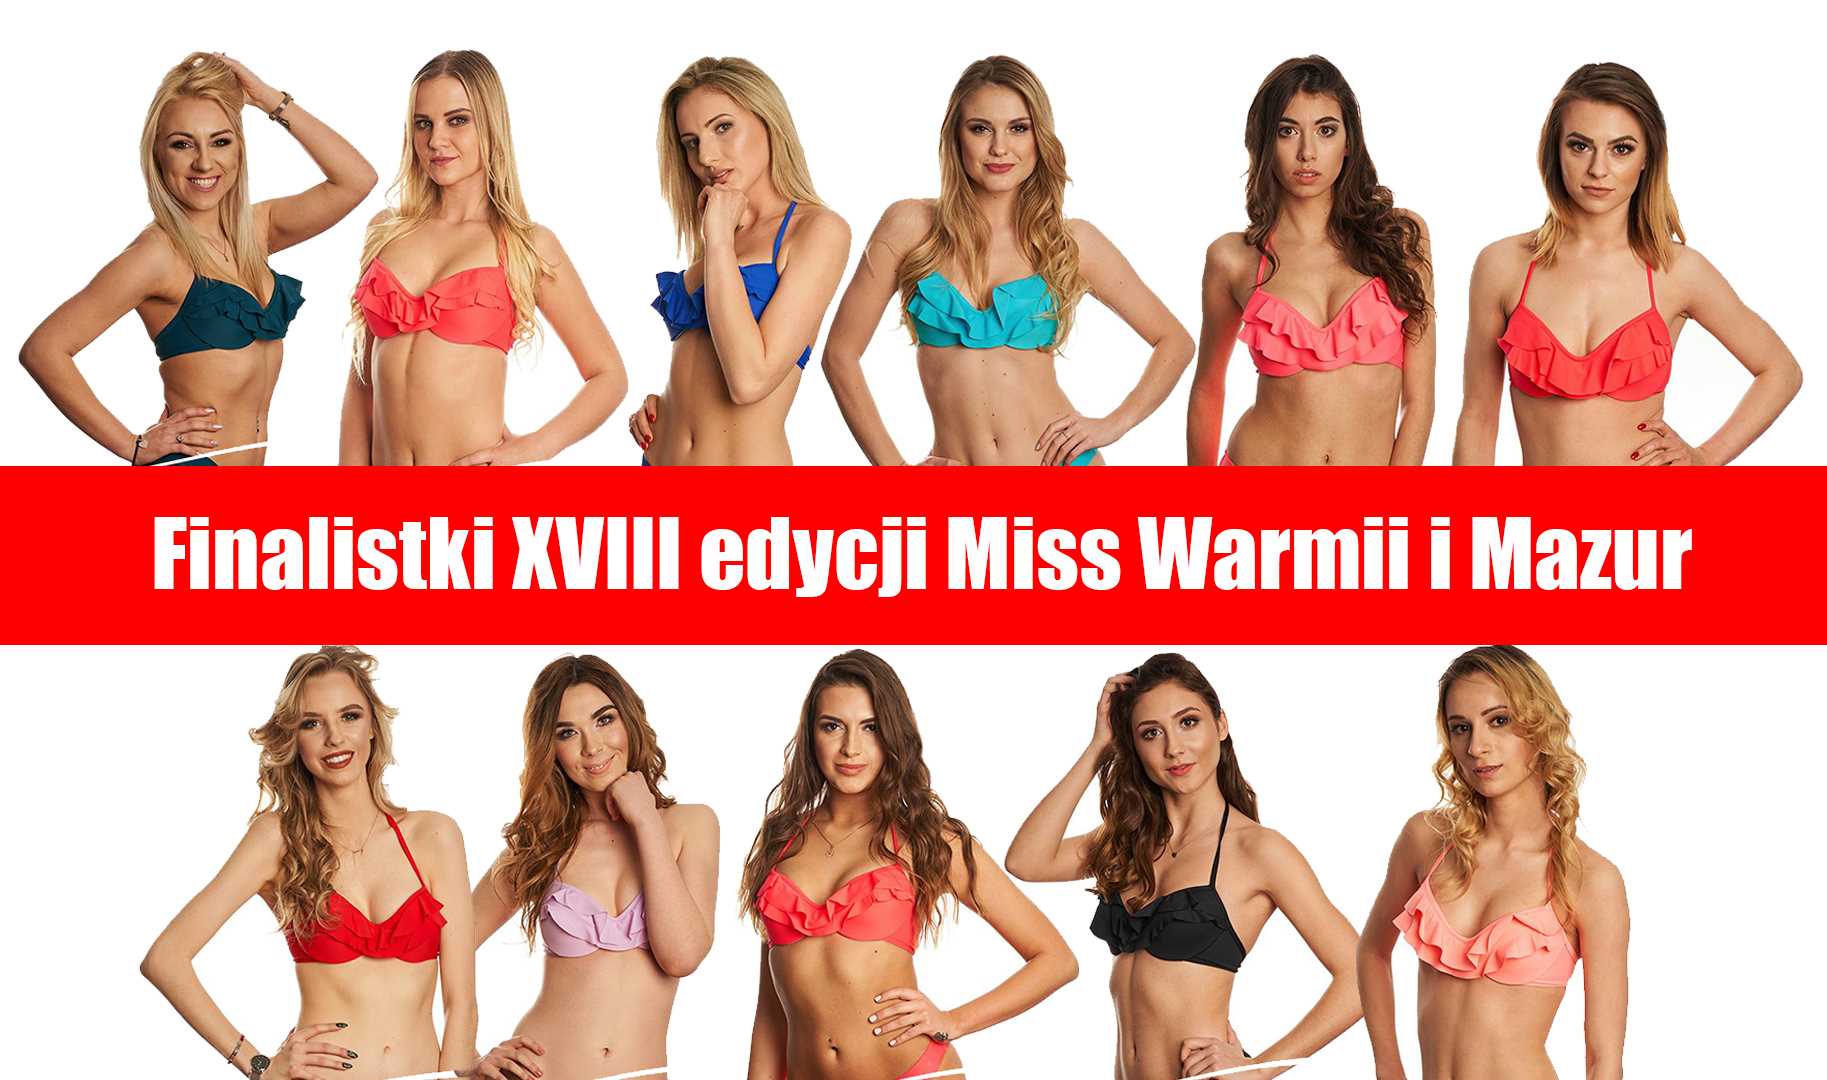 Miss Warmii i Mazur finalistki, Finalistki XXVIII edycji Miss Warmii i Mazur., Miss Warmii i Mazur, Miss Warmii i Mazur